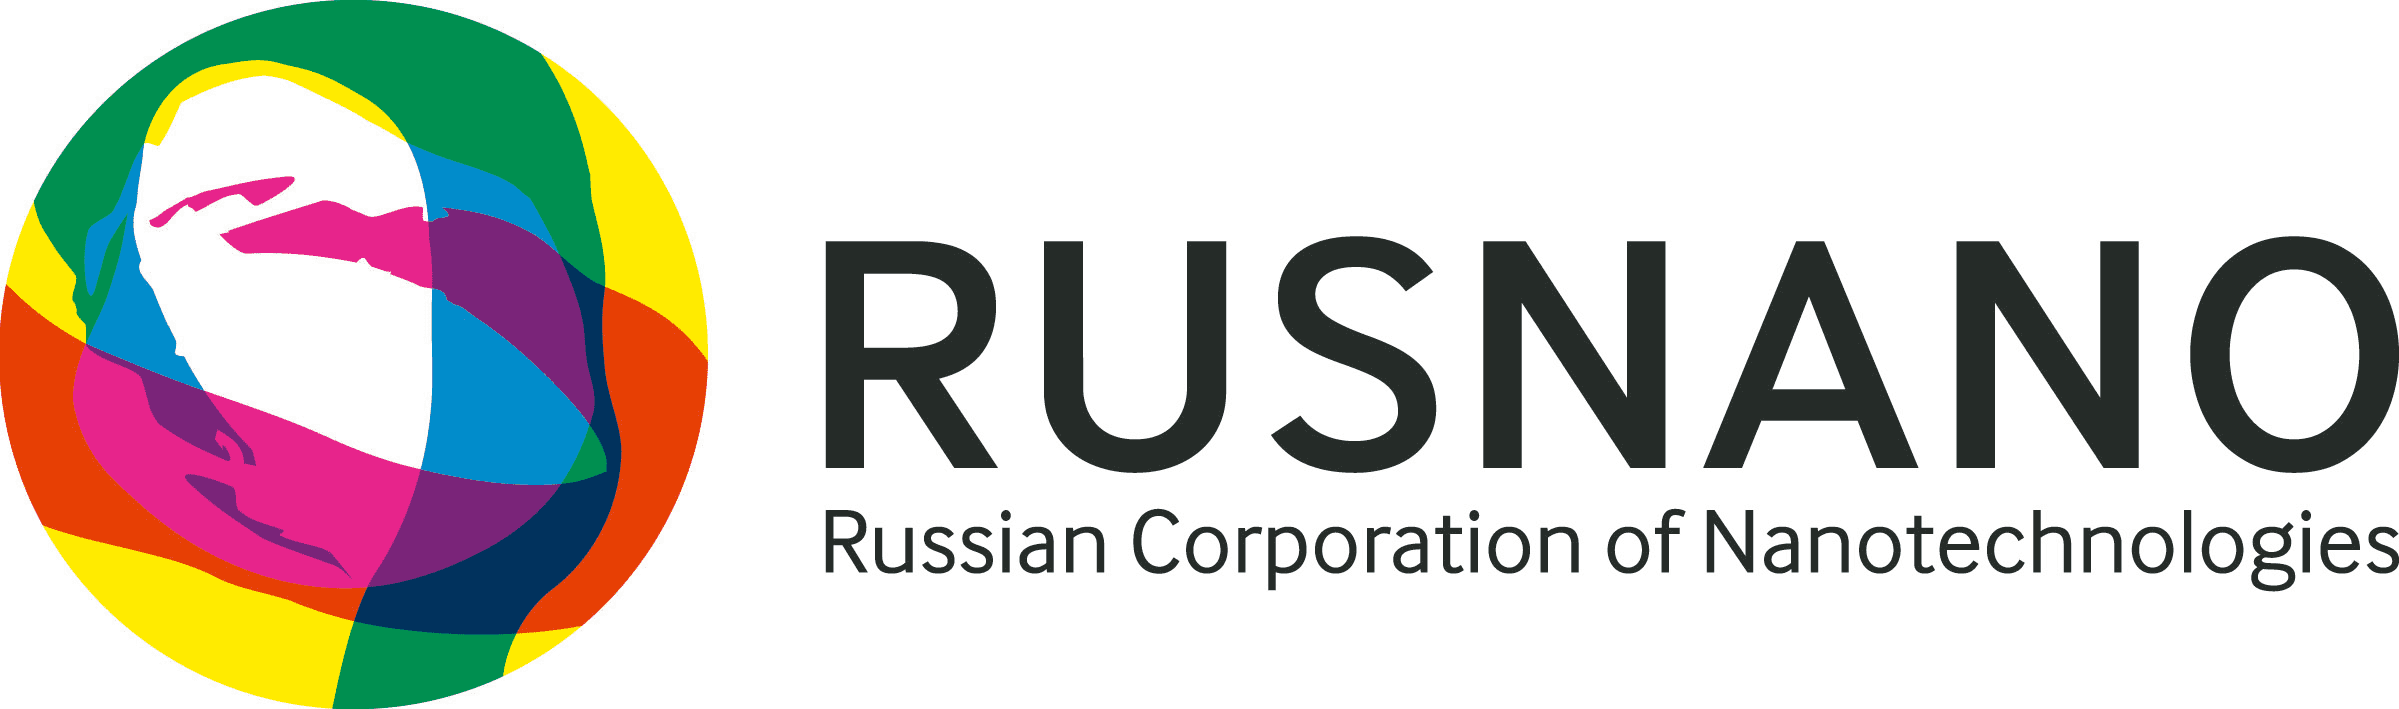 Rusnano logo